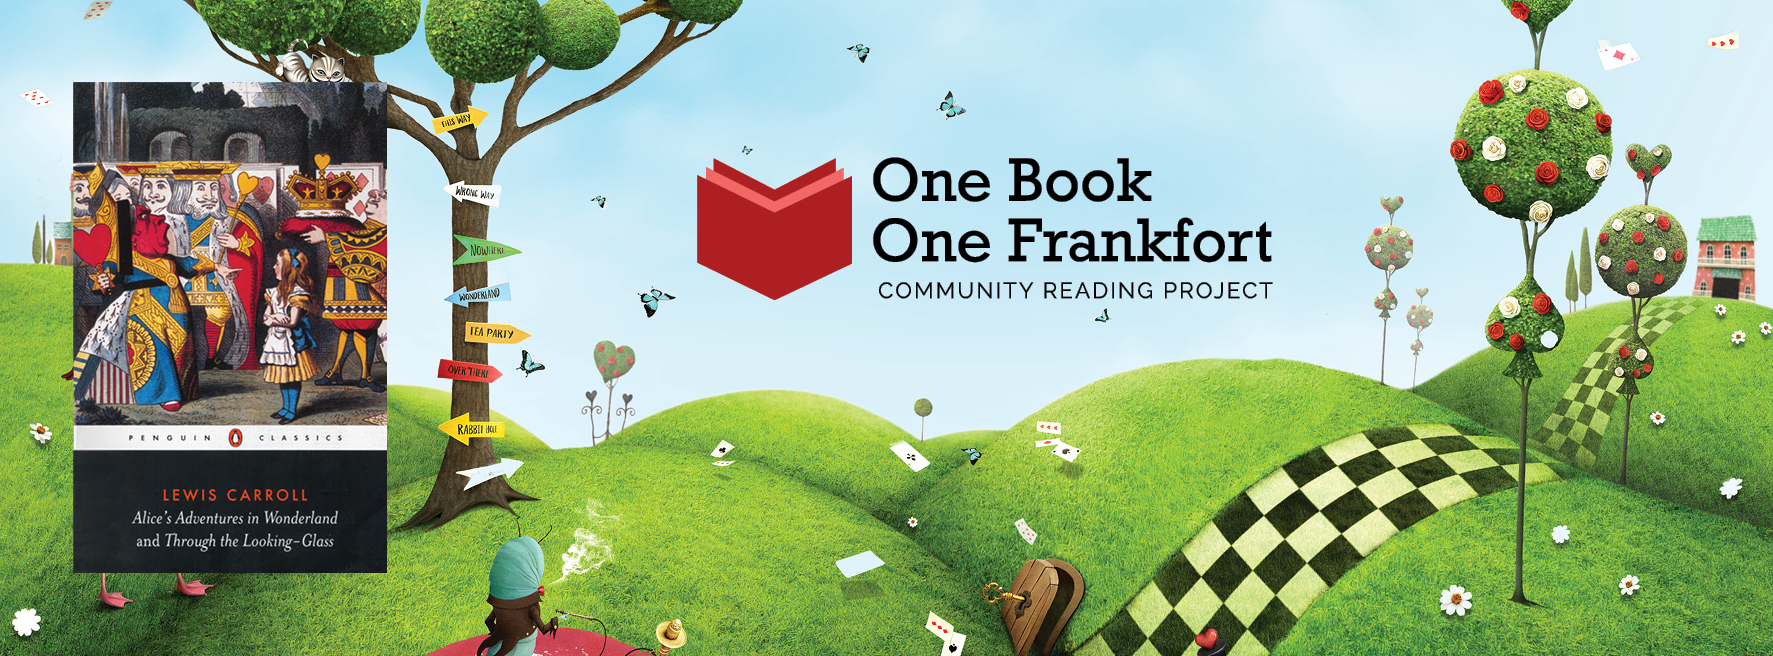 One Book One Frankfort banner - Alice's Adventures in Wonderland